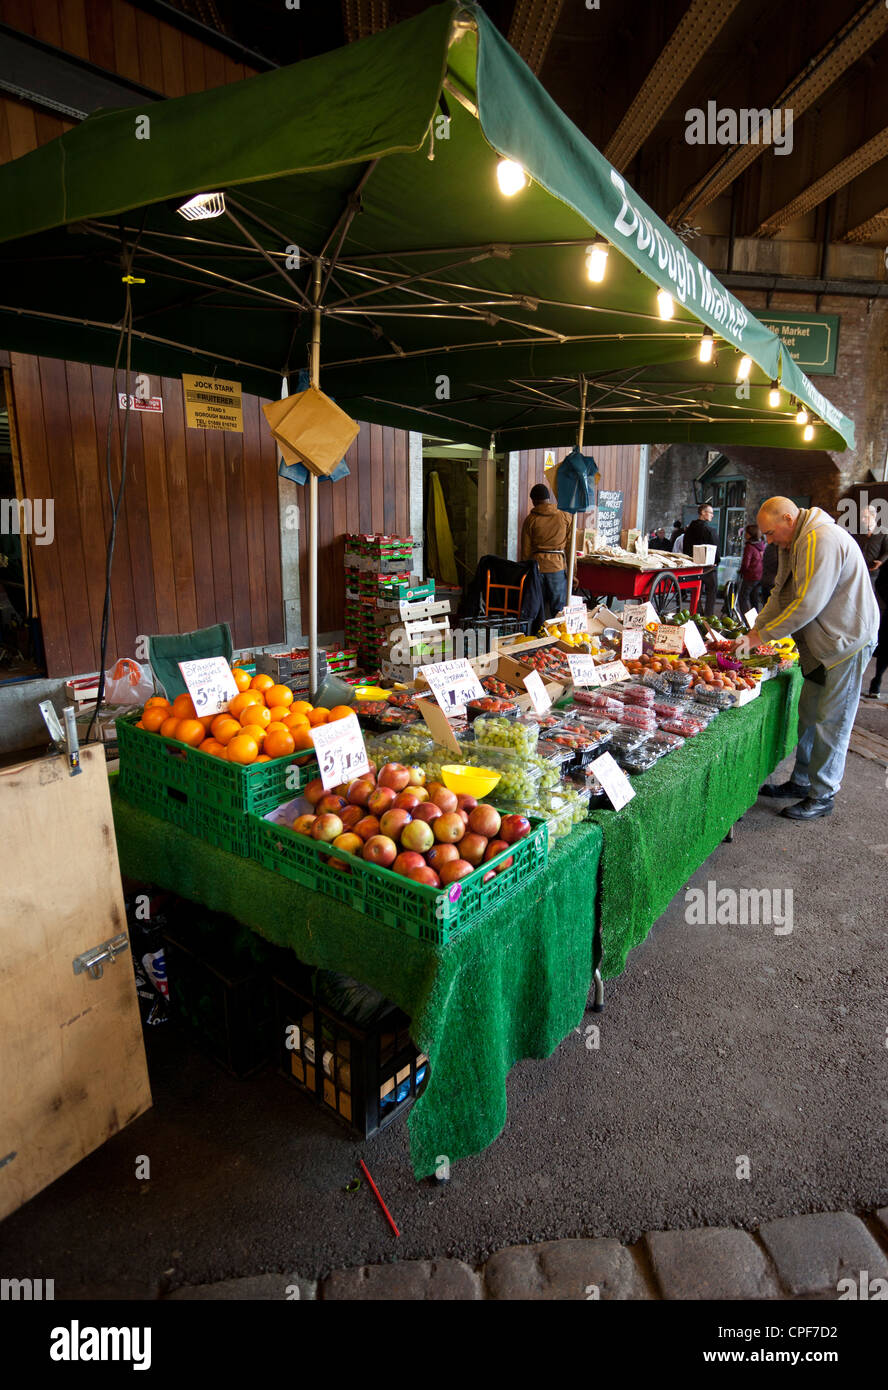 Greengrocer's stall, Borough Market, London, England, UK Stock Photo